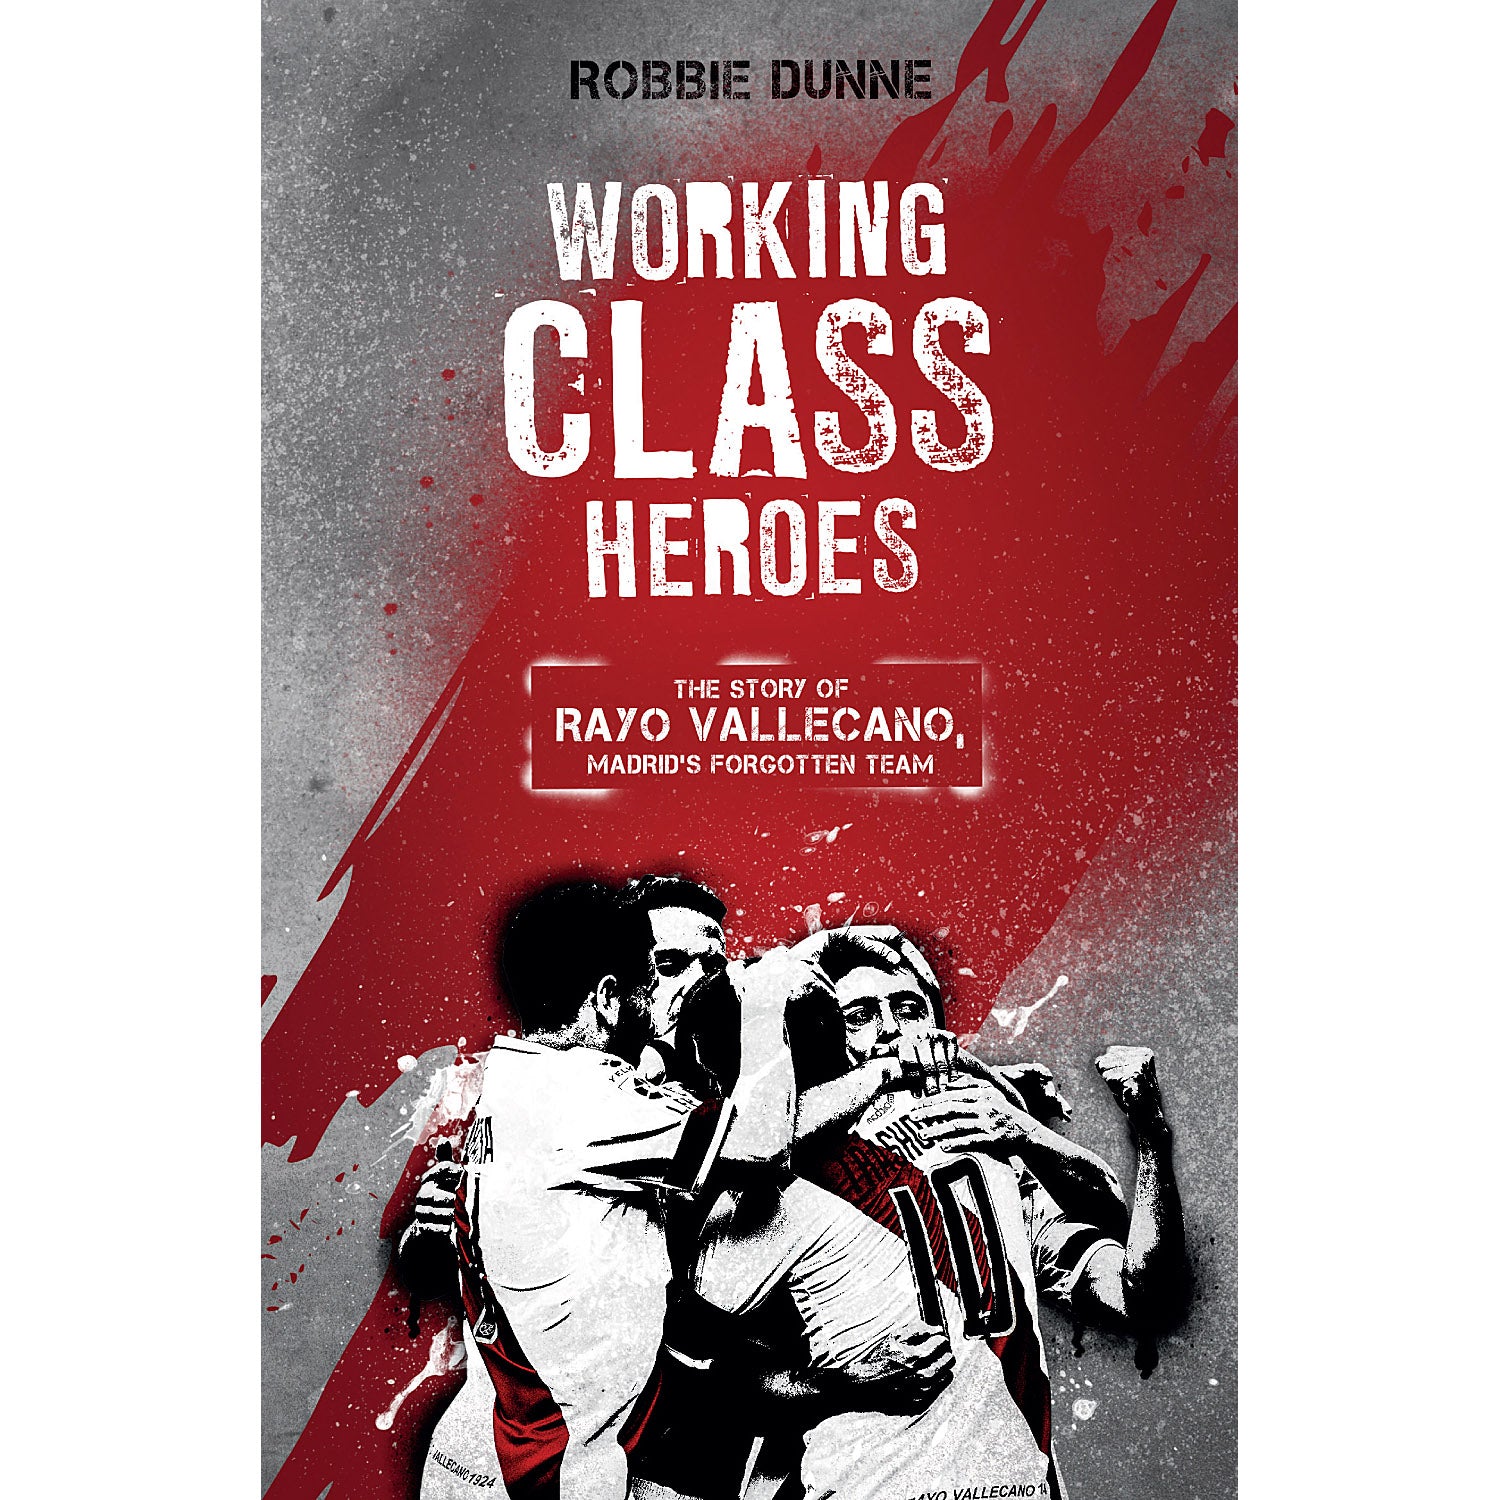 Working Class Heroes – The Story of Rayo Vallecano, Madrid's Forgotten Team